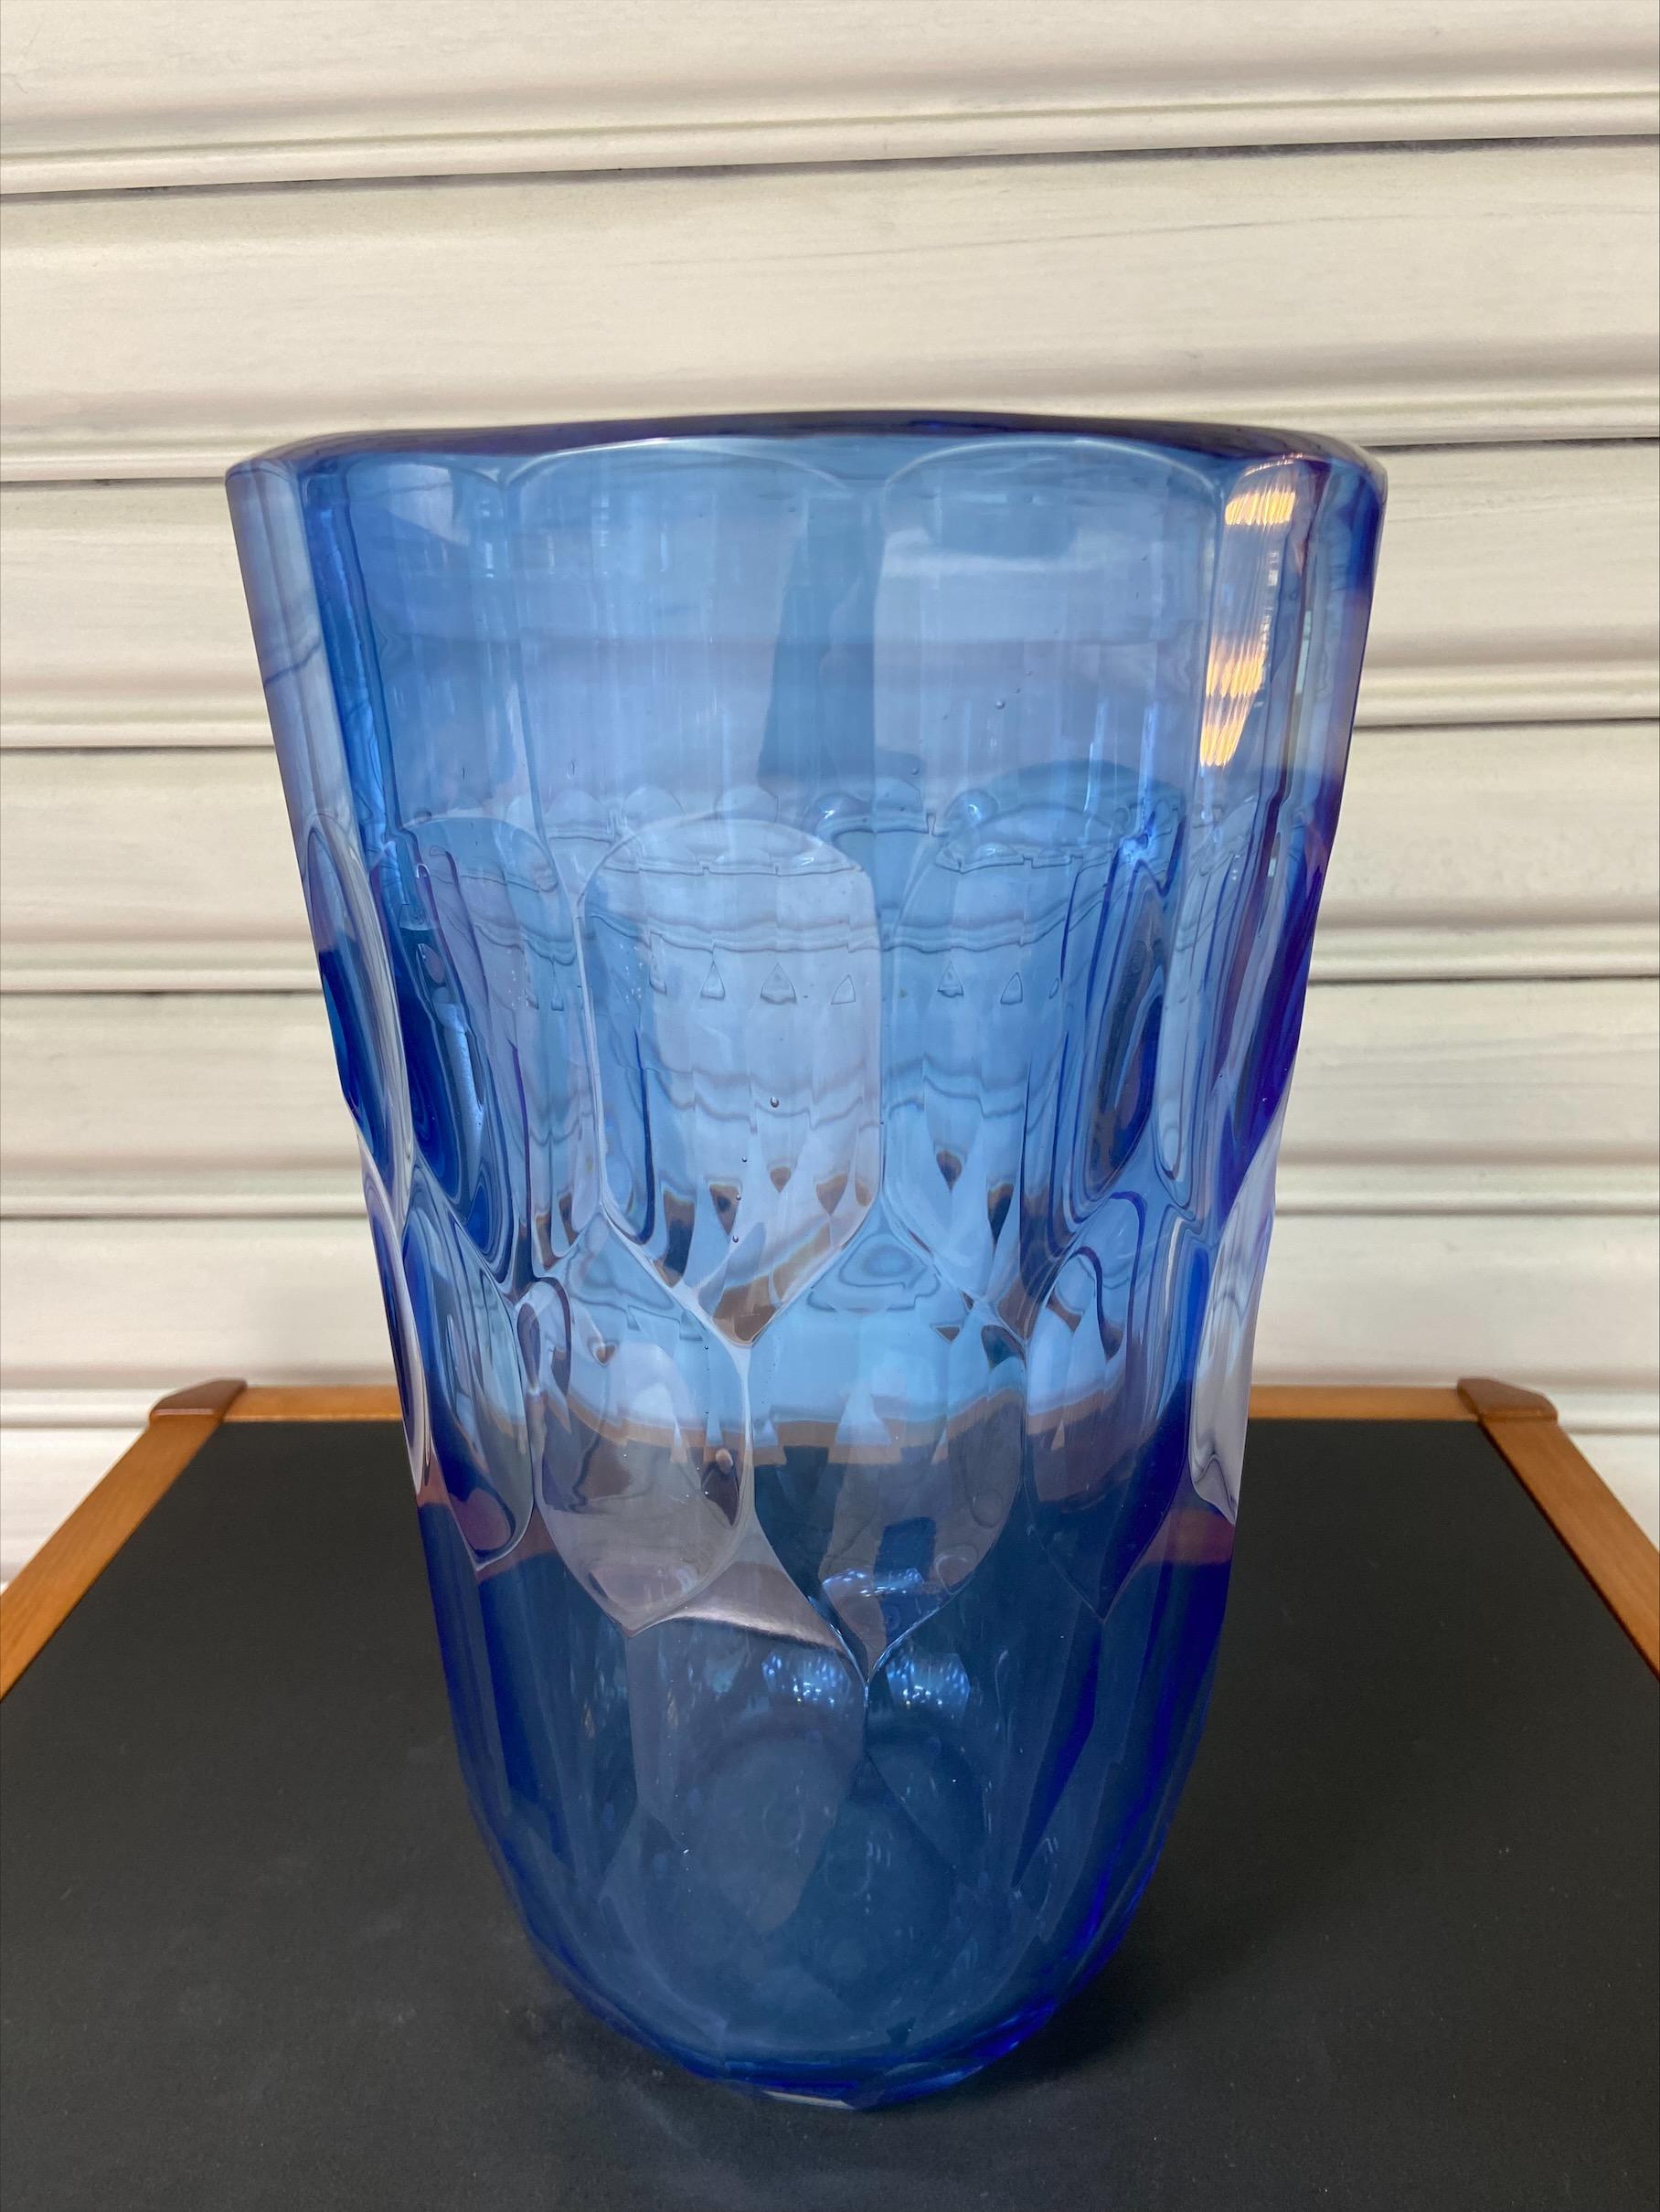 Vase - Alberto Dona.
Blue Murano glass.
Signed under the vase. 
Measures: H 40, 5 x D 26cm.
Circa 1980.
3200€.